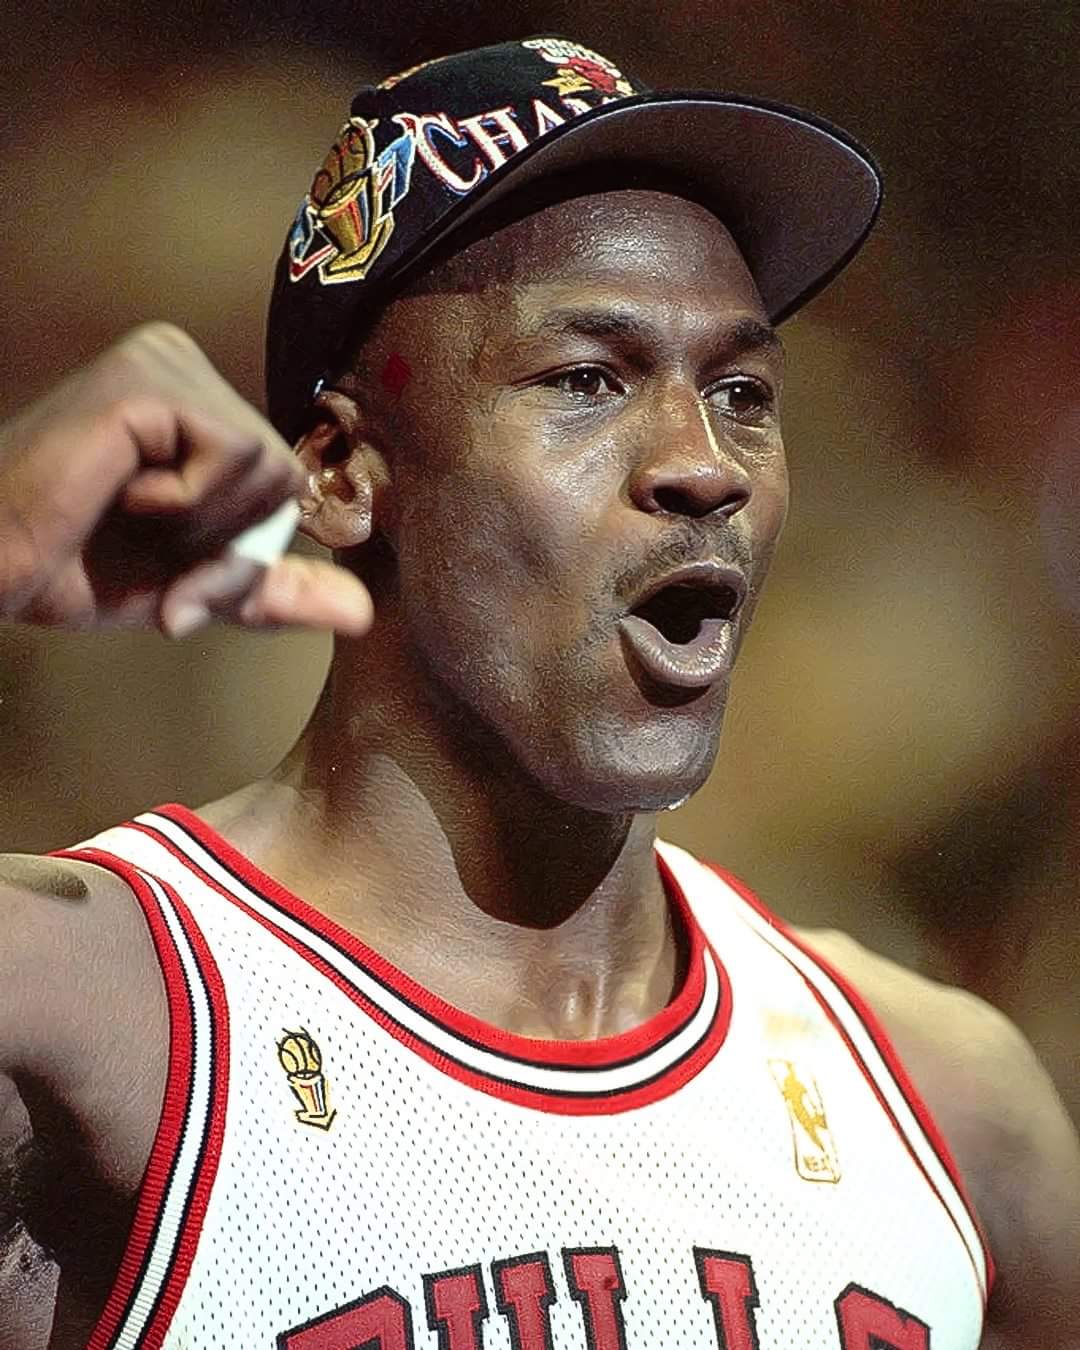 Happy birthday Michael Jordan
THE G. O. A. T 